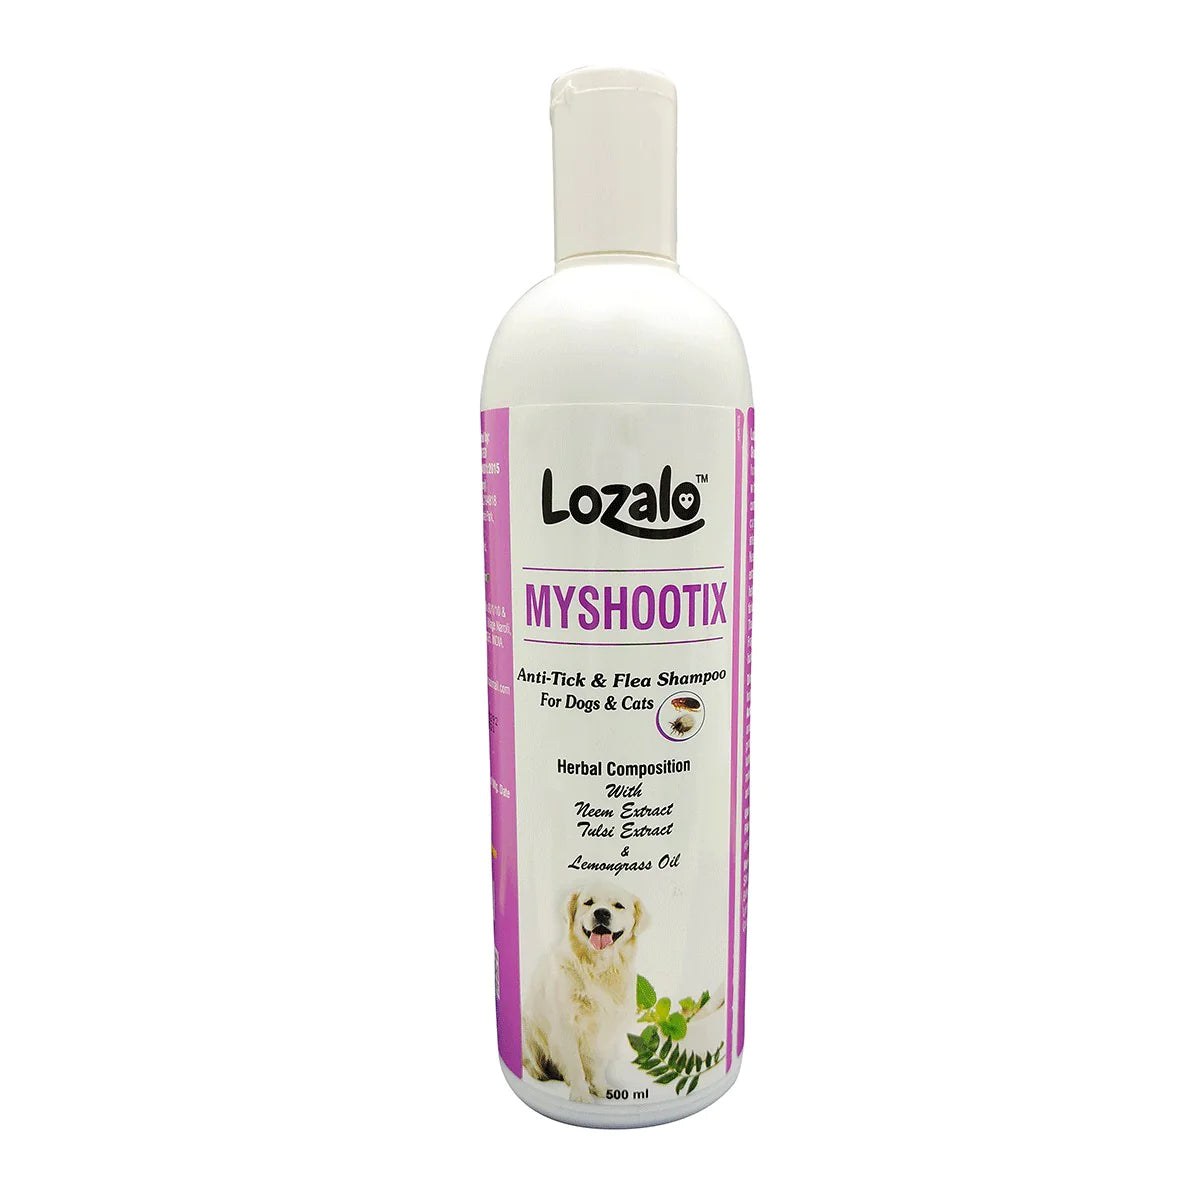 Lozalo Myshootix Anti-Tick & Flea Herbal Shampoo For Dogs & Cats